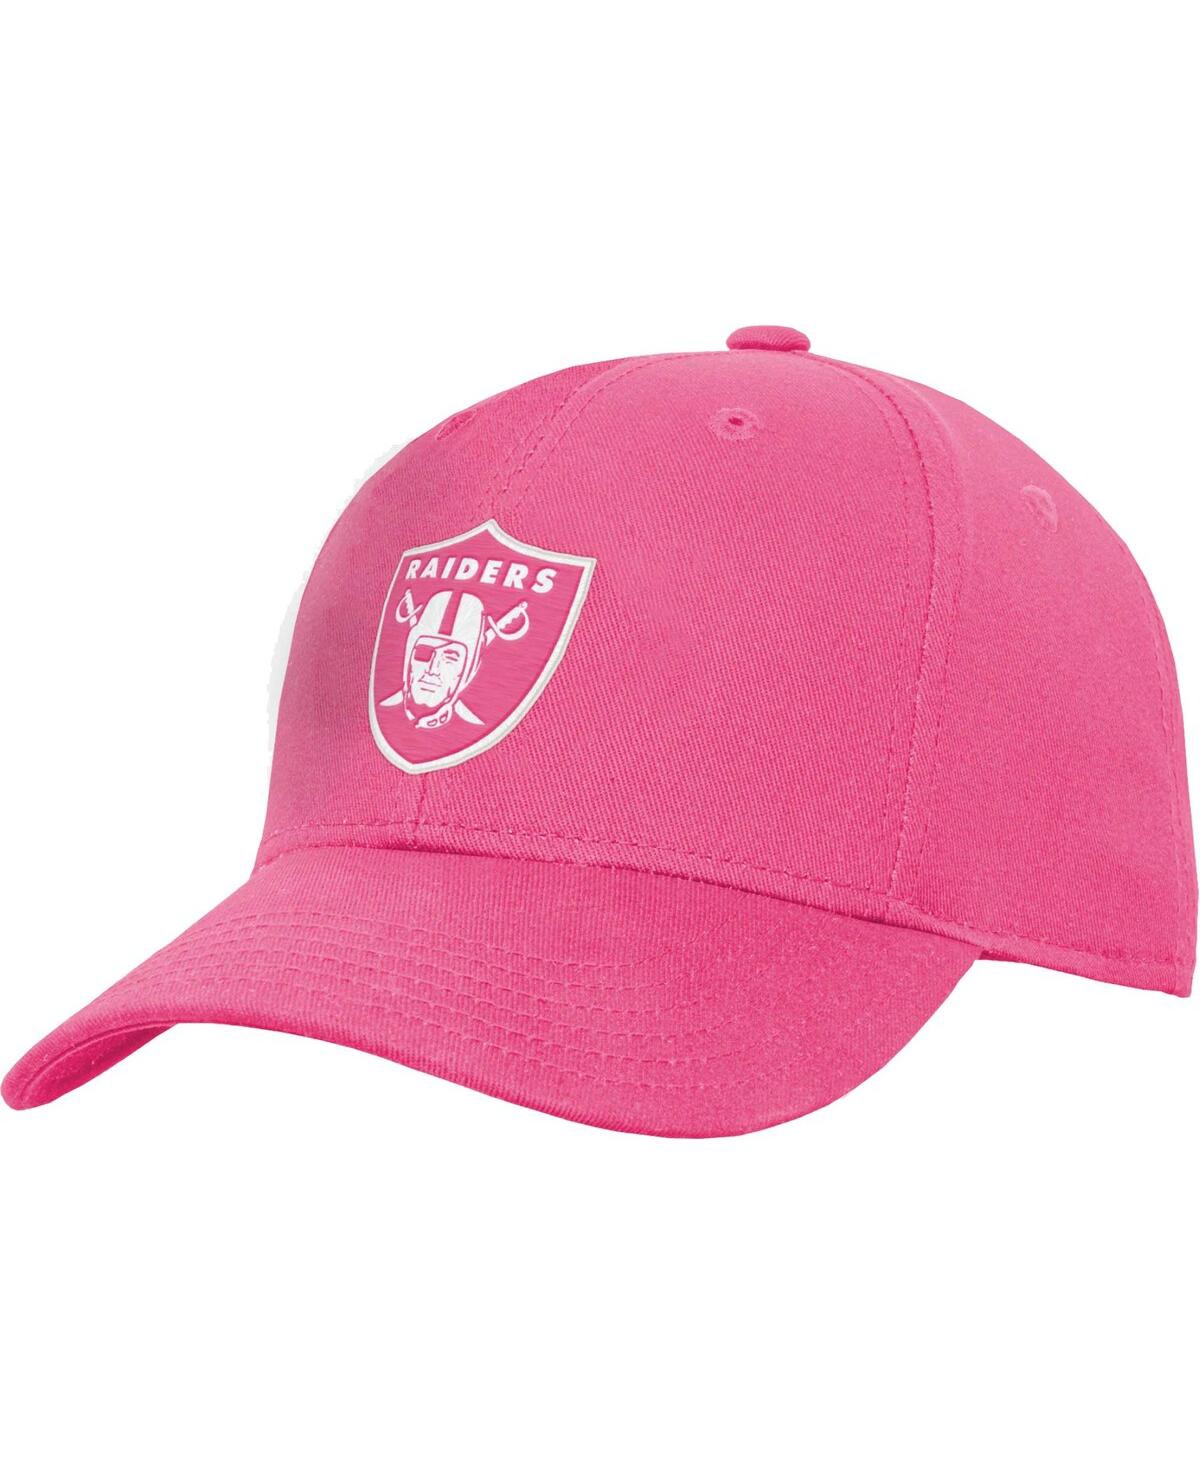 Outerstuff Kids' Girls Youth Pink Las Vegas Raiders Adjustable Hat